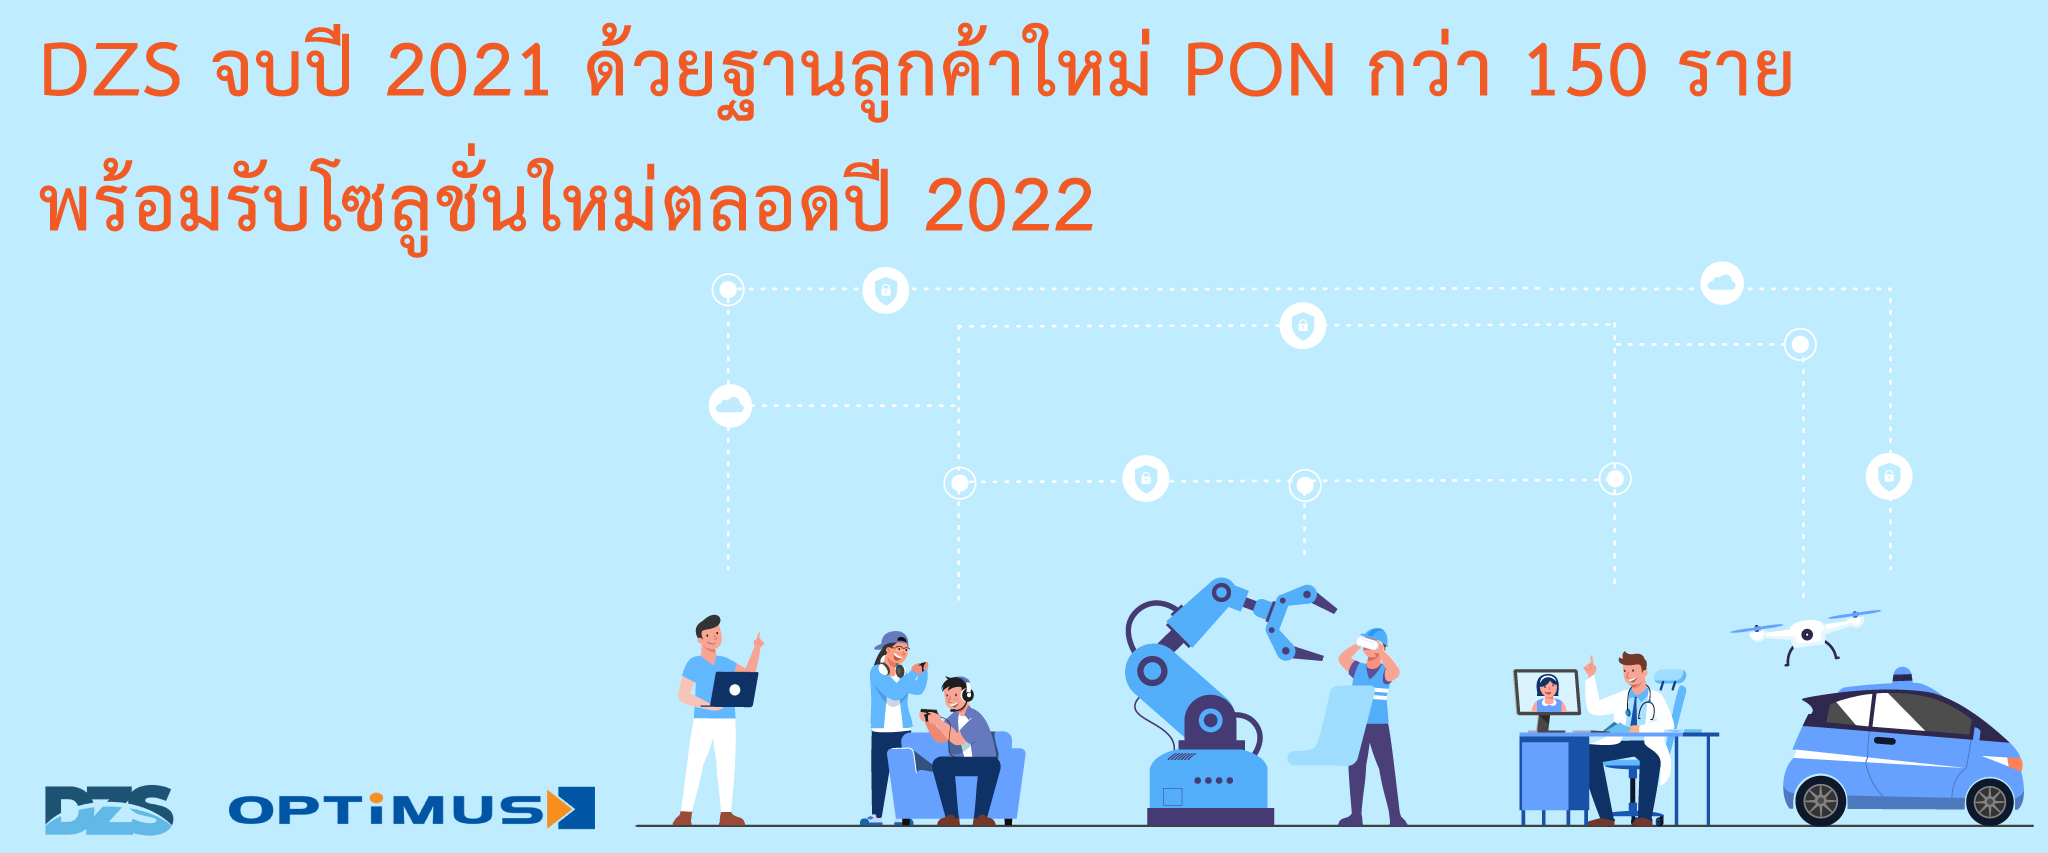 DZS จบปี 2021 ด้วยฐานลูกค้าใหม่ PON กว่า 150 ราย พร้อมรับโซลูชั่นใหม่ตลอดปี 2022